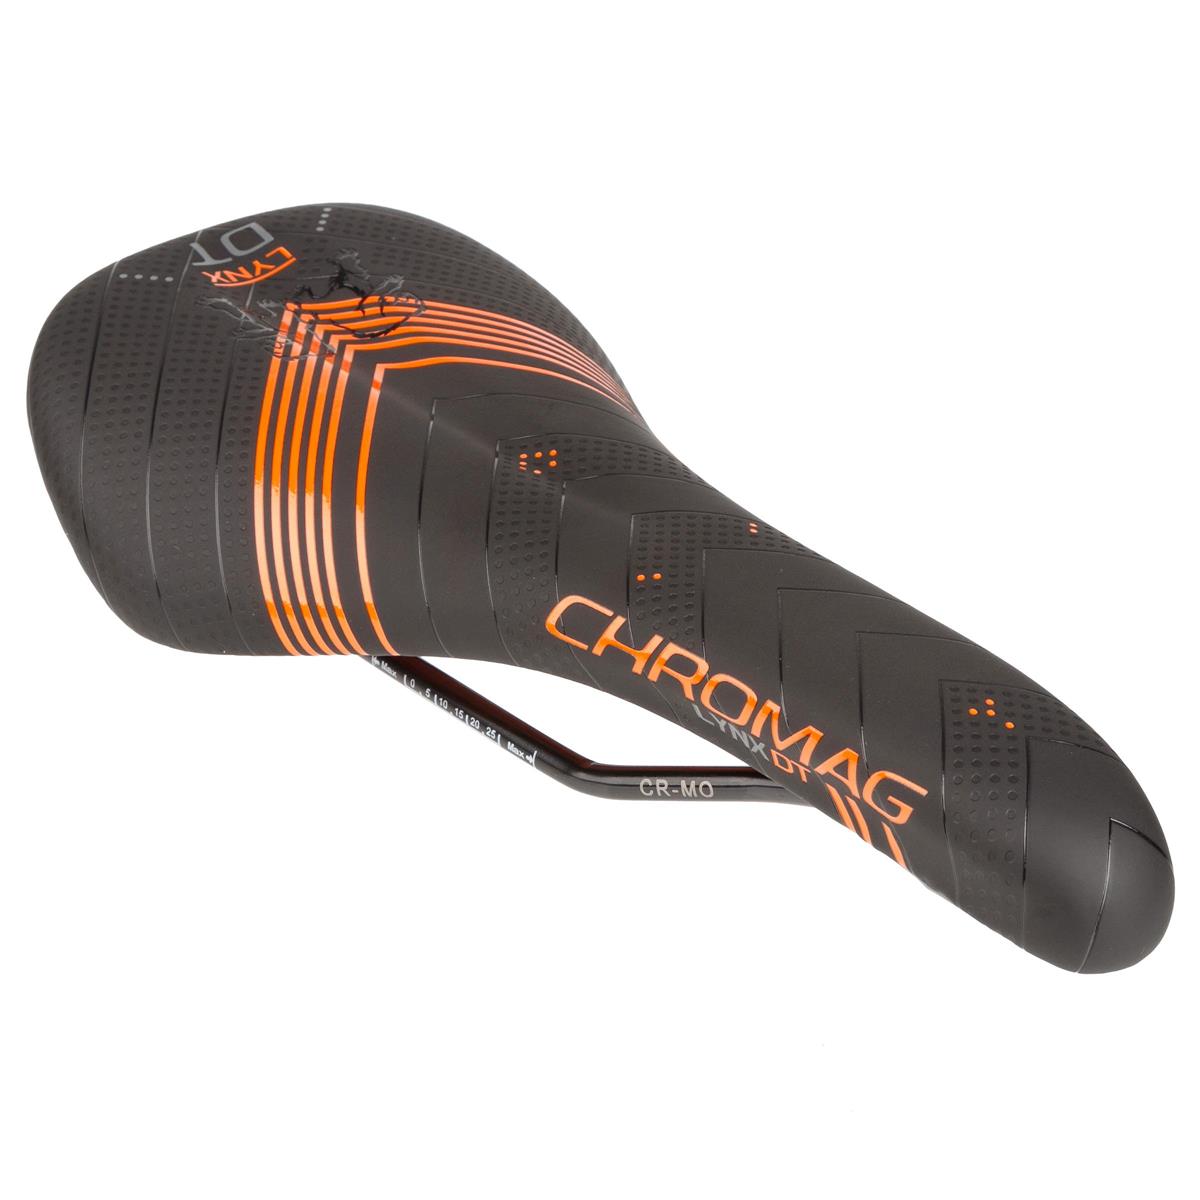 Chromag Saddle Lynx DT 2019 280 x 135 mm, Black/Tight Orange